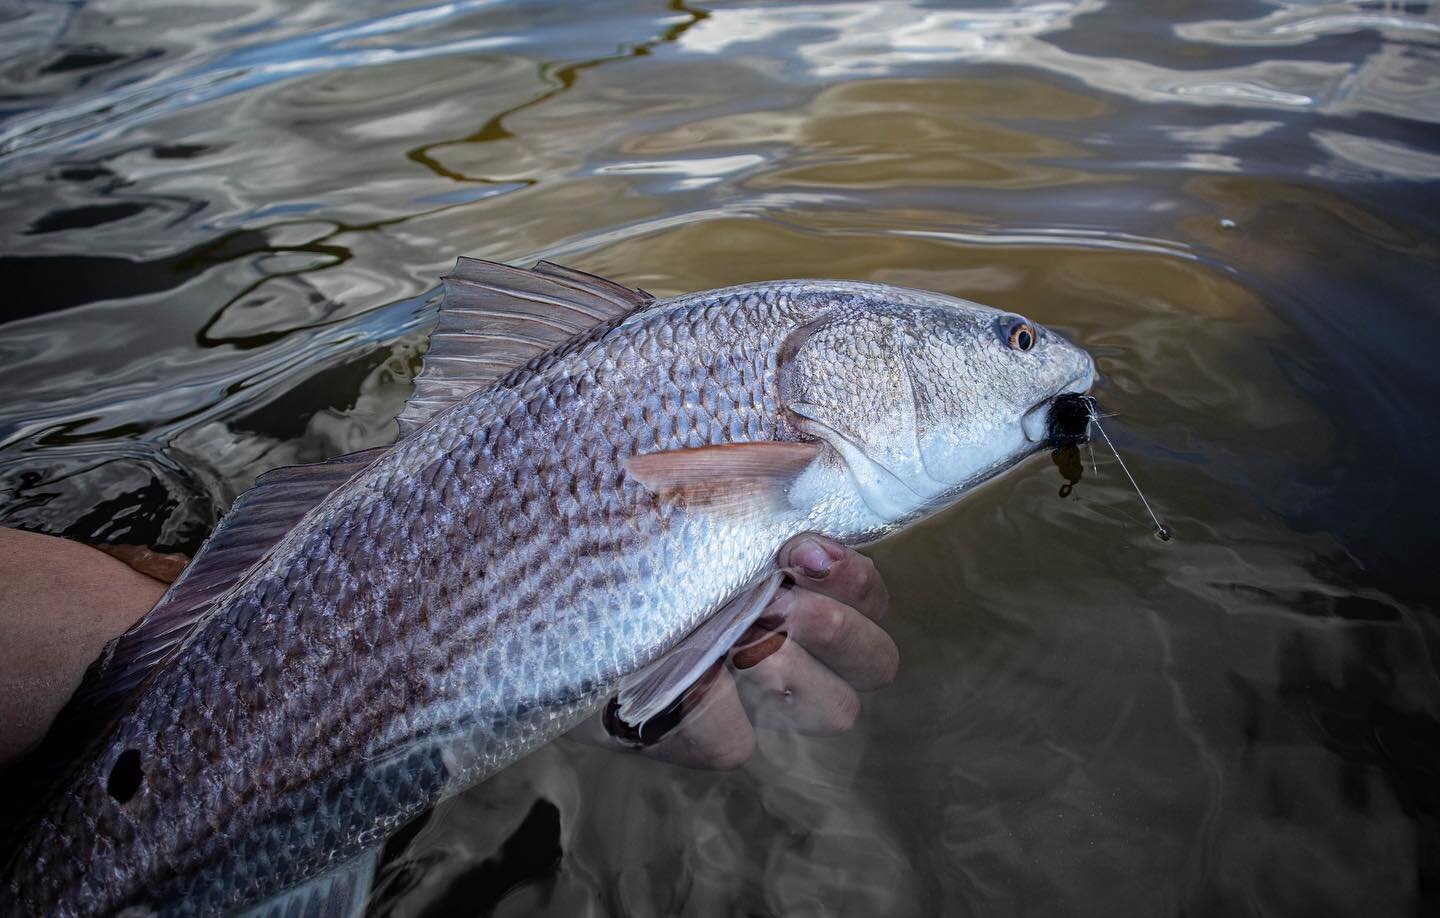 Northeast Florida redfish on da fly, challenging, but rewarding.
Grandslamfishing.com
#Redfish #Mudminnow #Fly